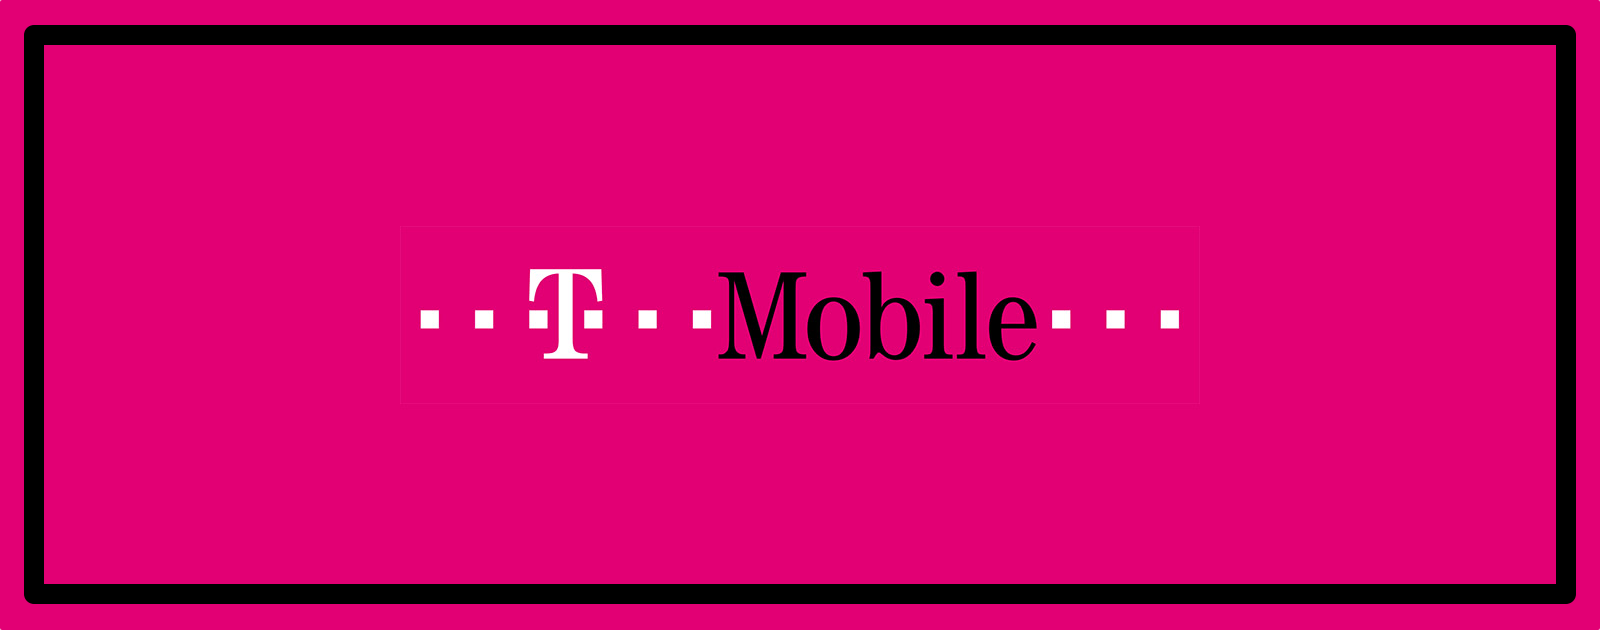 T- Mobile Logo - T-Mobile API Exposed Customer Data, Company Said No Evidence of Data ...